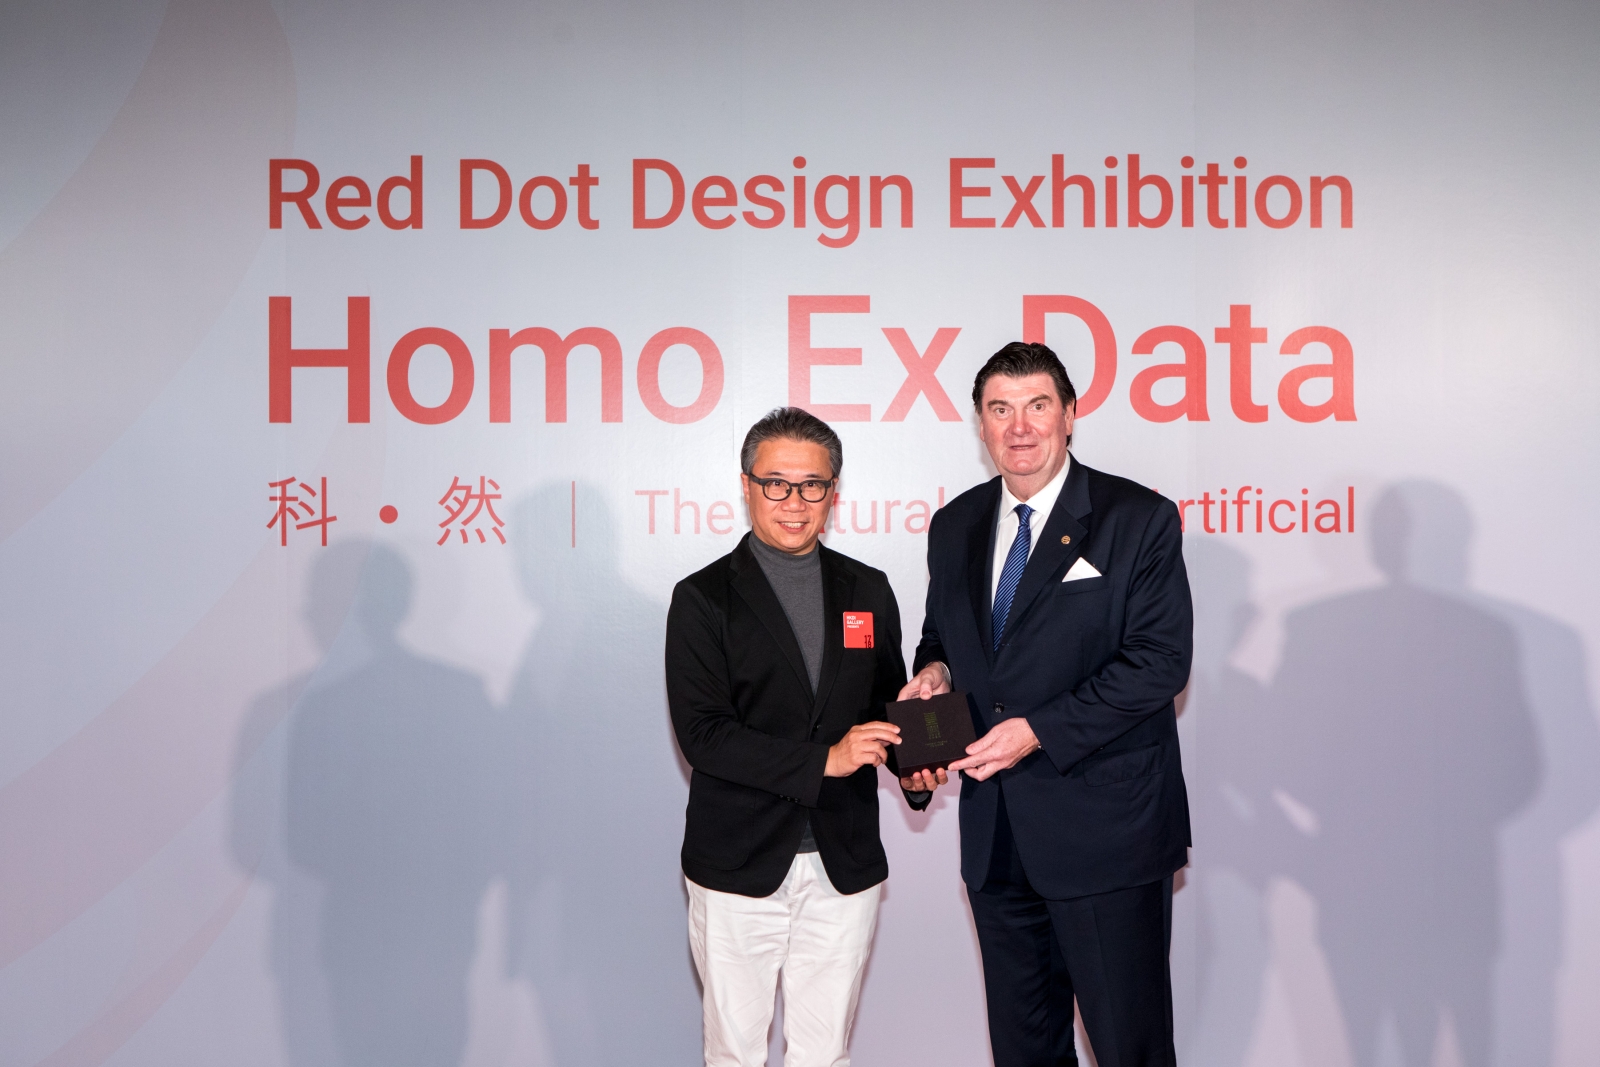 HKDI Gallery Presents红点设计《科 • 然》主题展览
【Homo Ex Data － The Natural of the Artificial】
 迈向未来数码时代的科技创新与影响